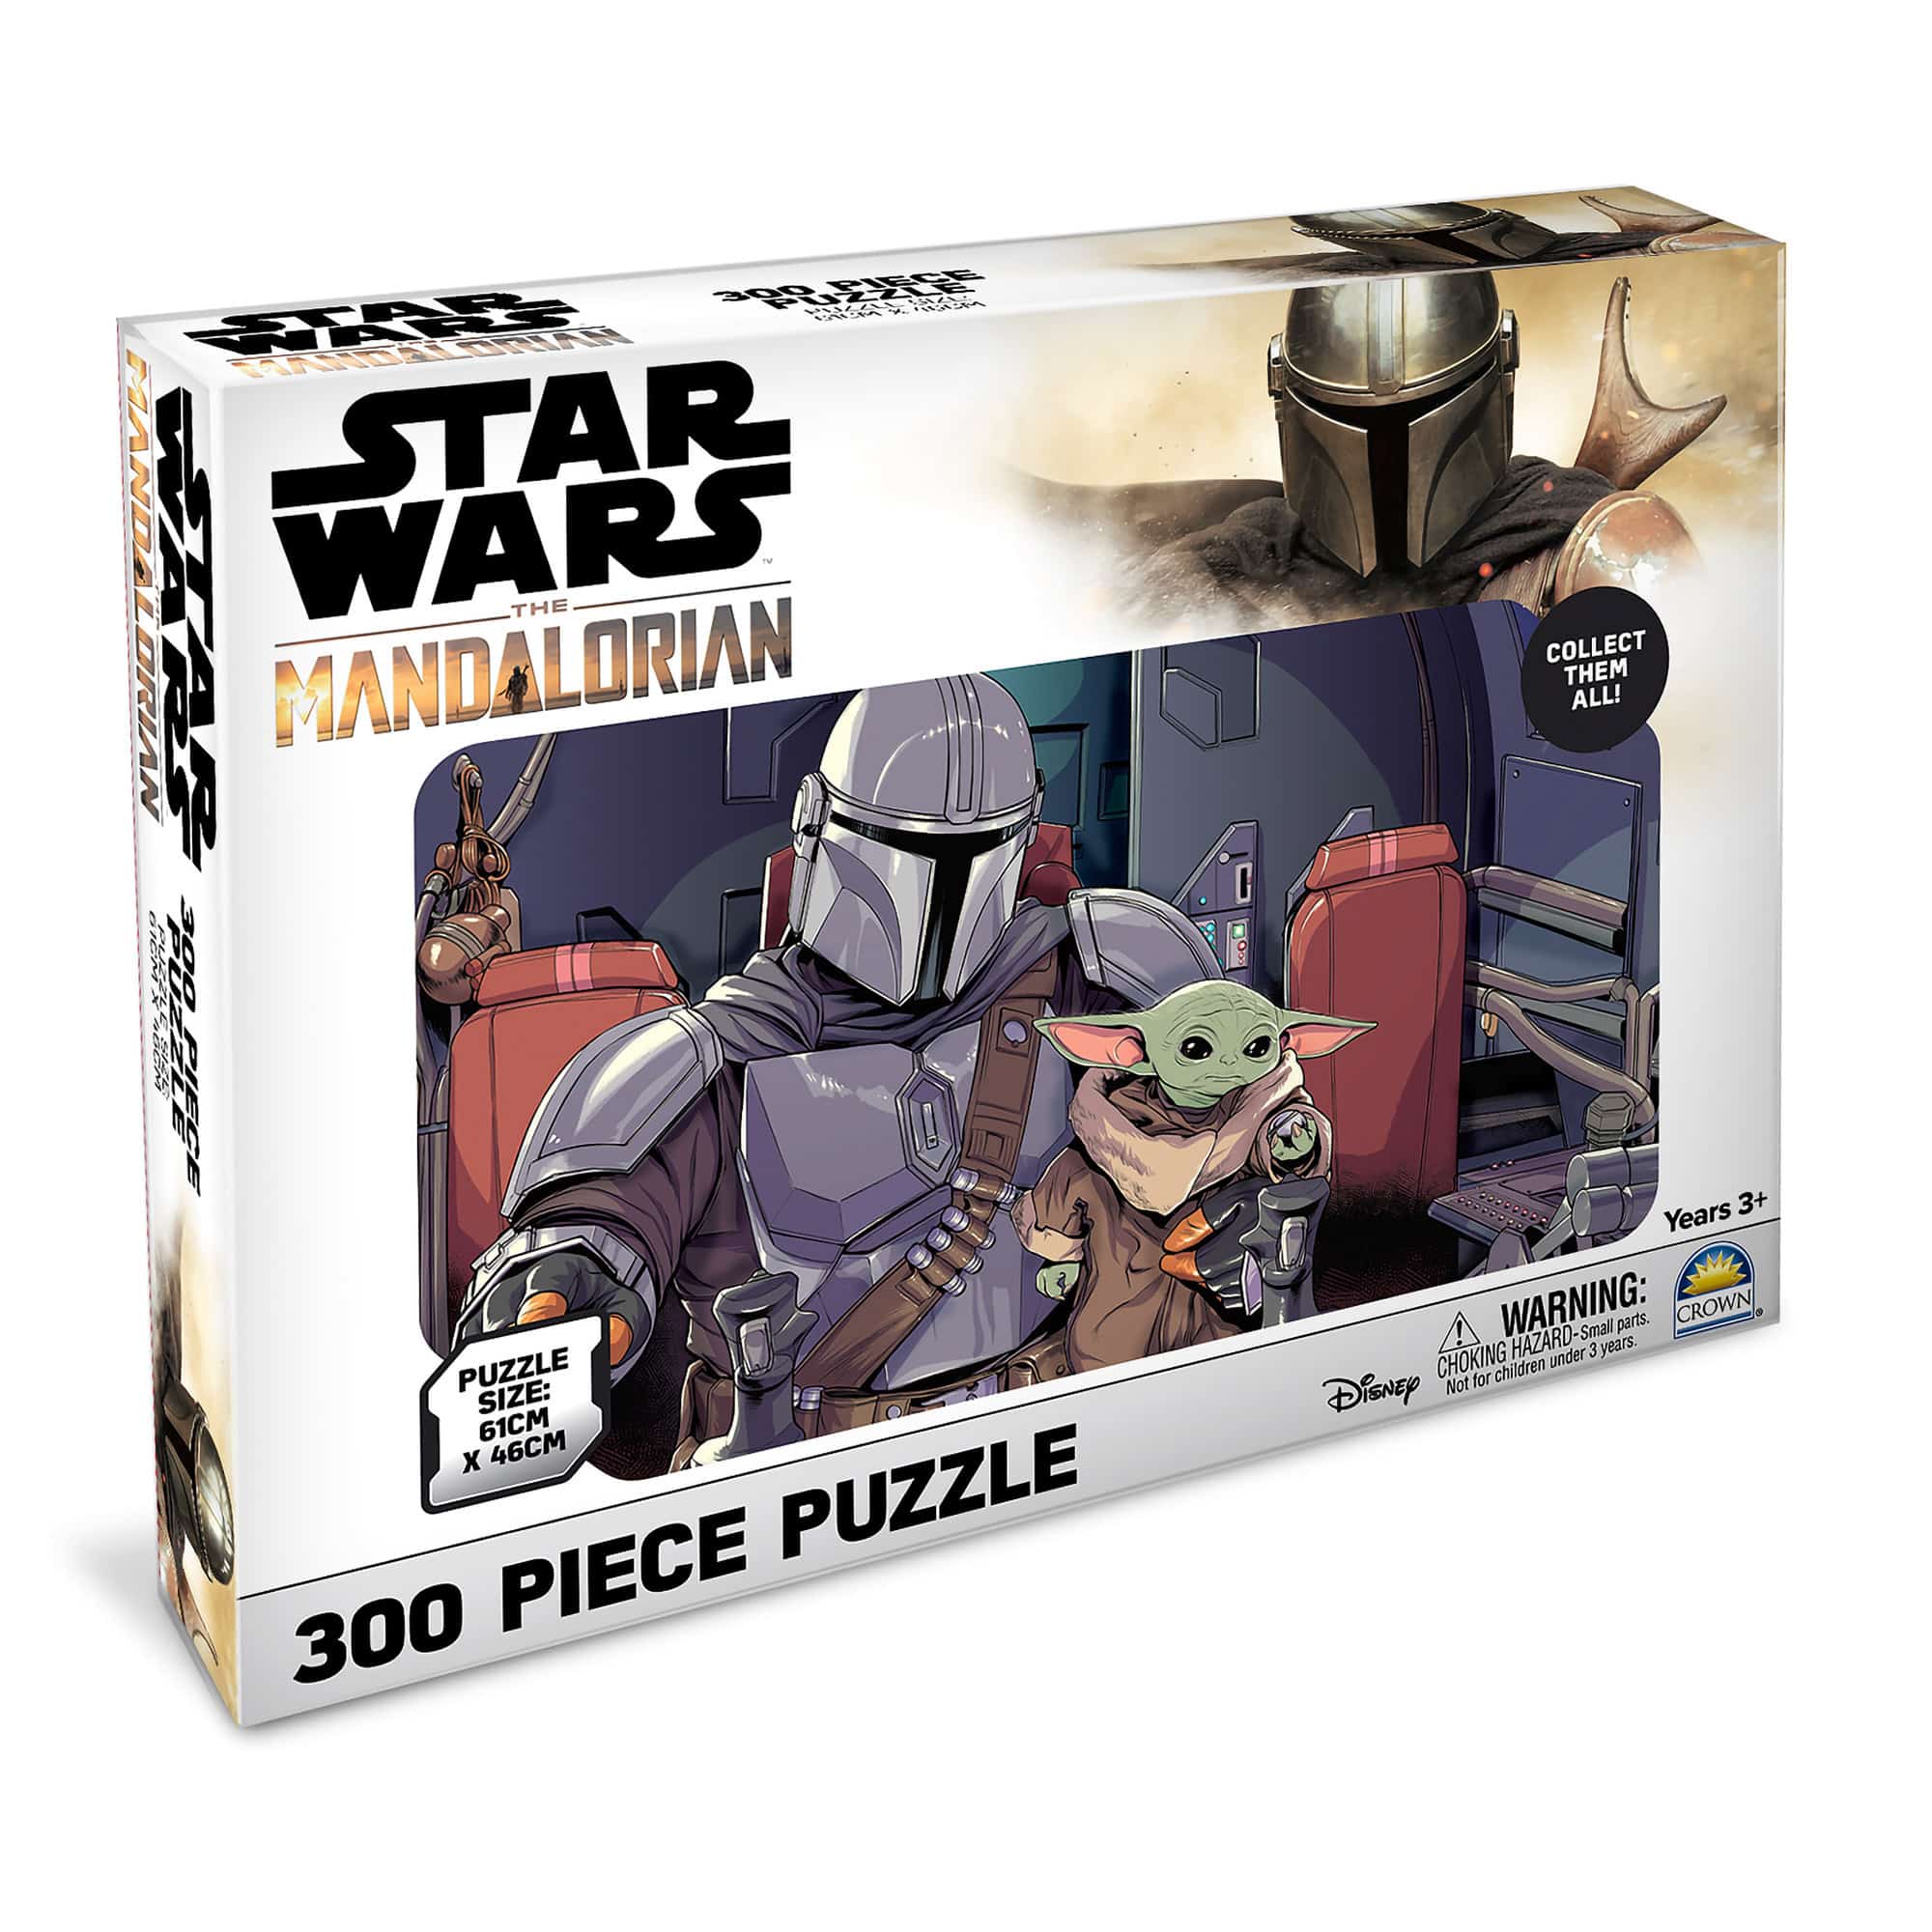 Star Wars - The Mandalorian - 300 Piece Puzzle Assortment